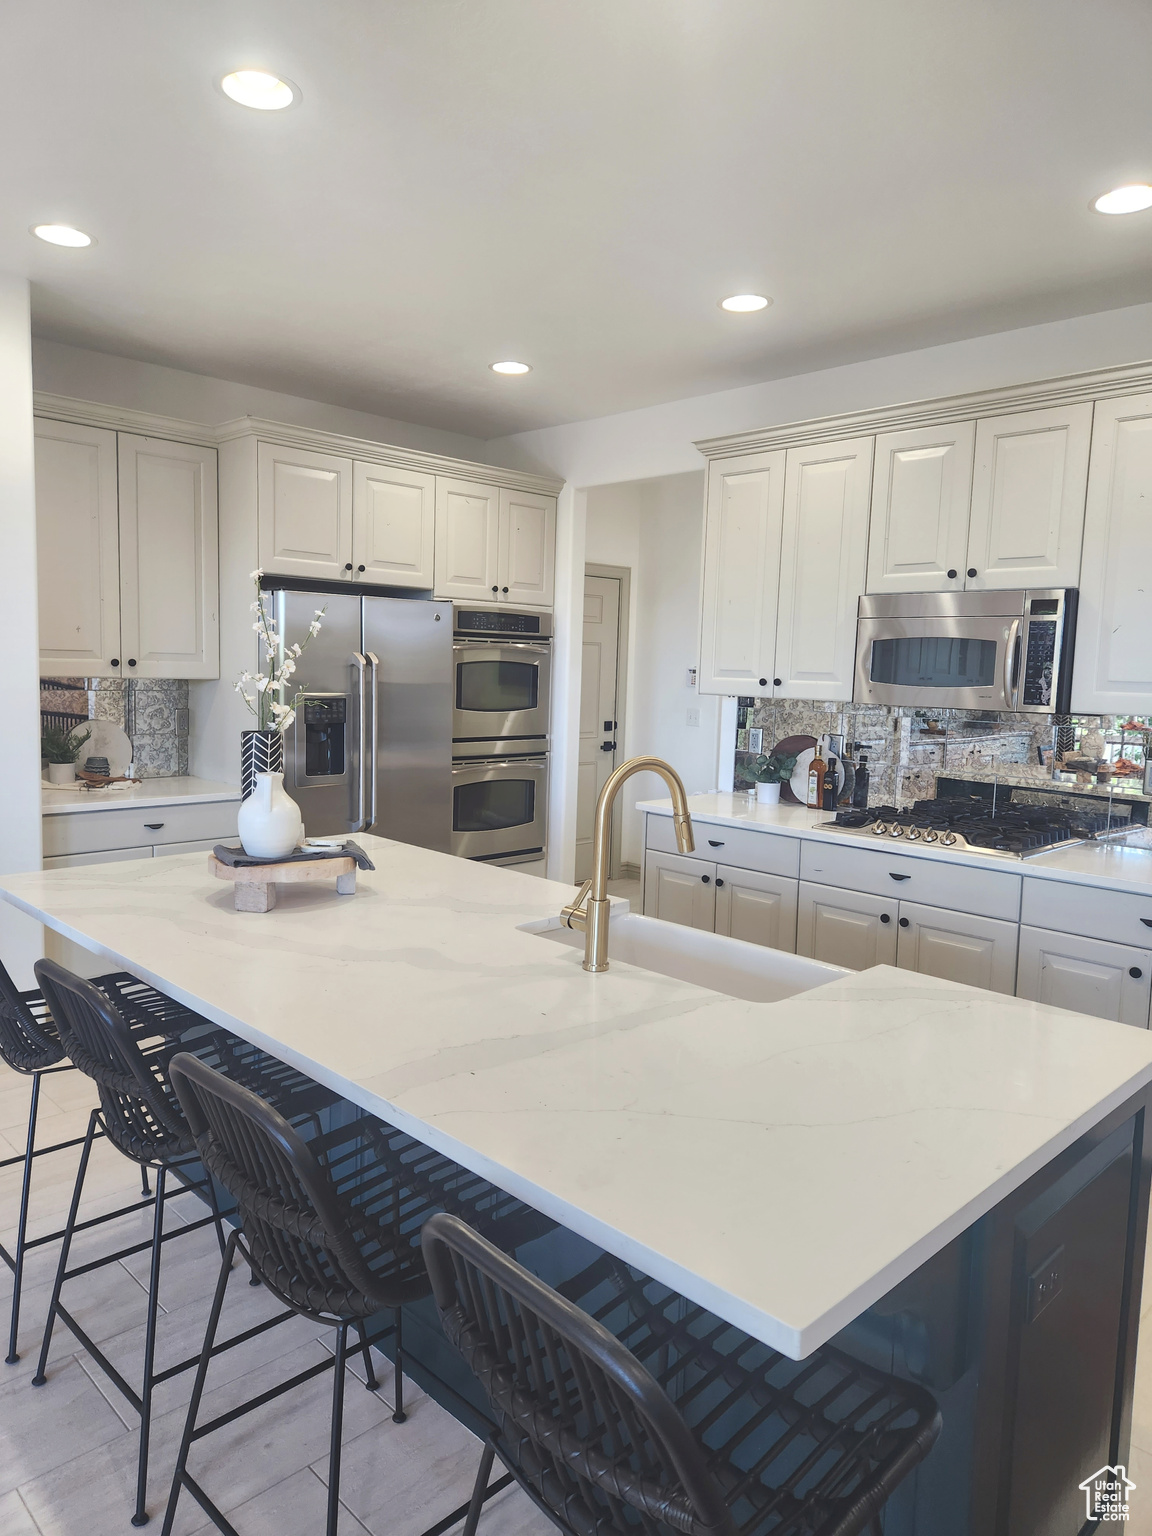 Kitchen featuring a kitchen island, a kitchen breakfast bar, tasteful backsplash, and appliances with stainless steel finishes